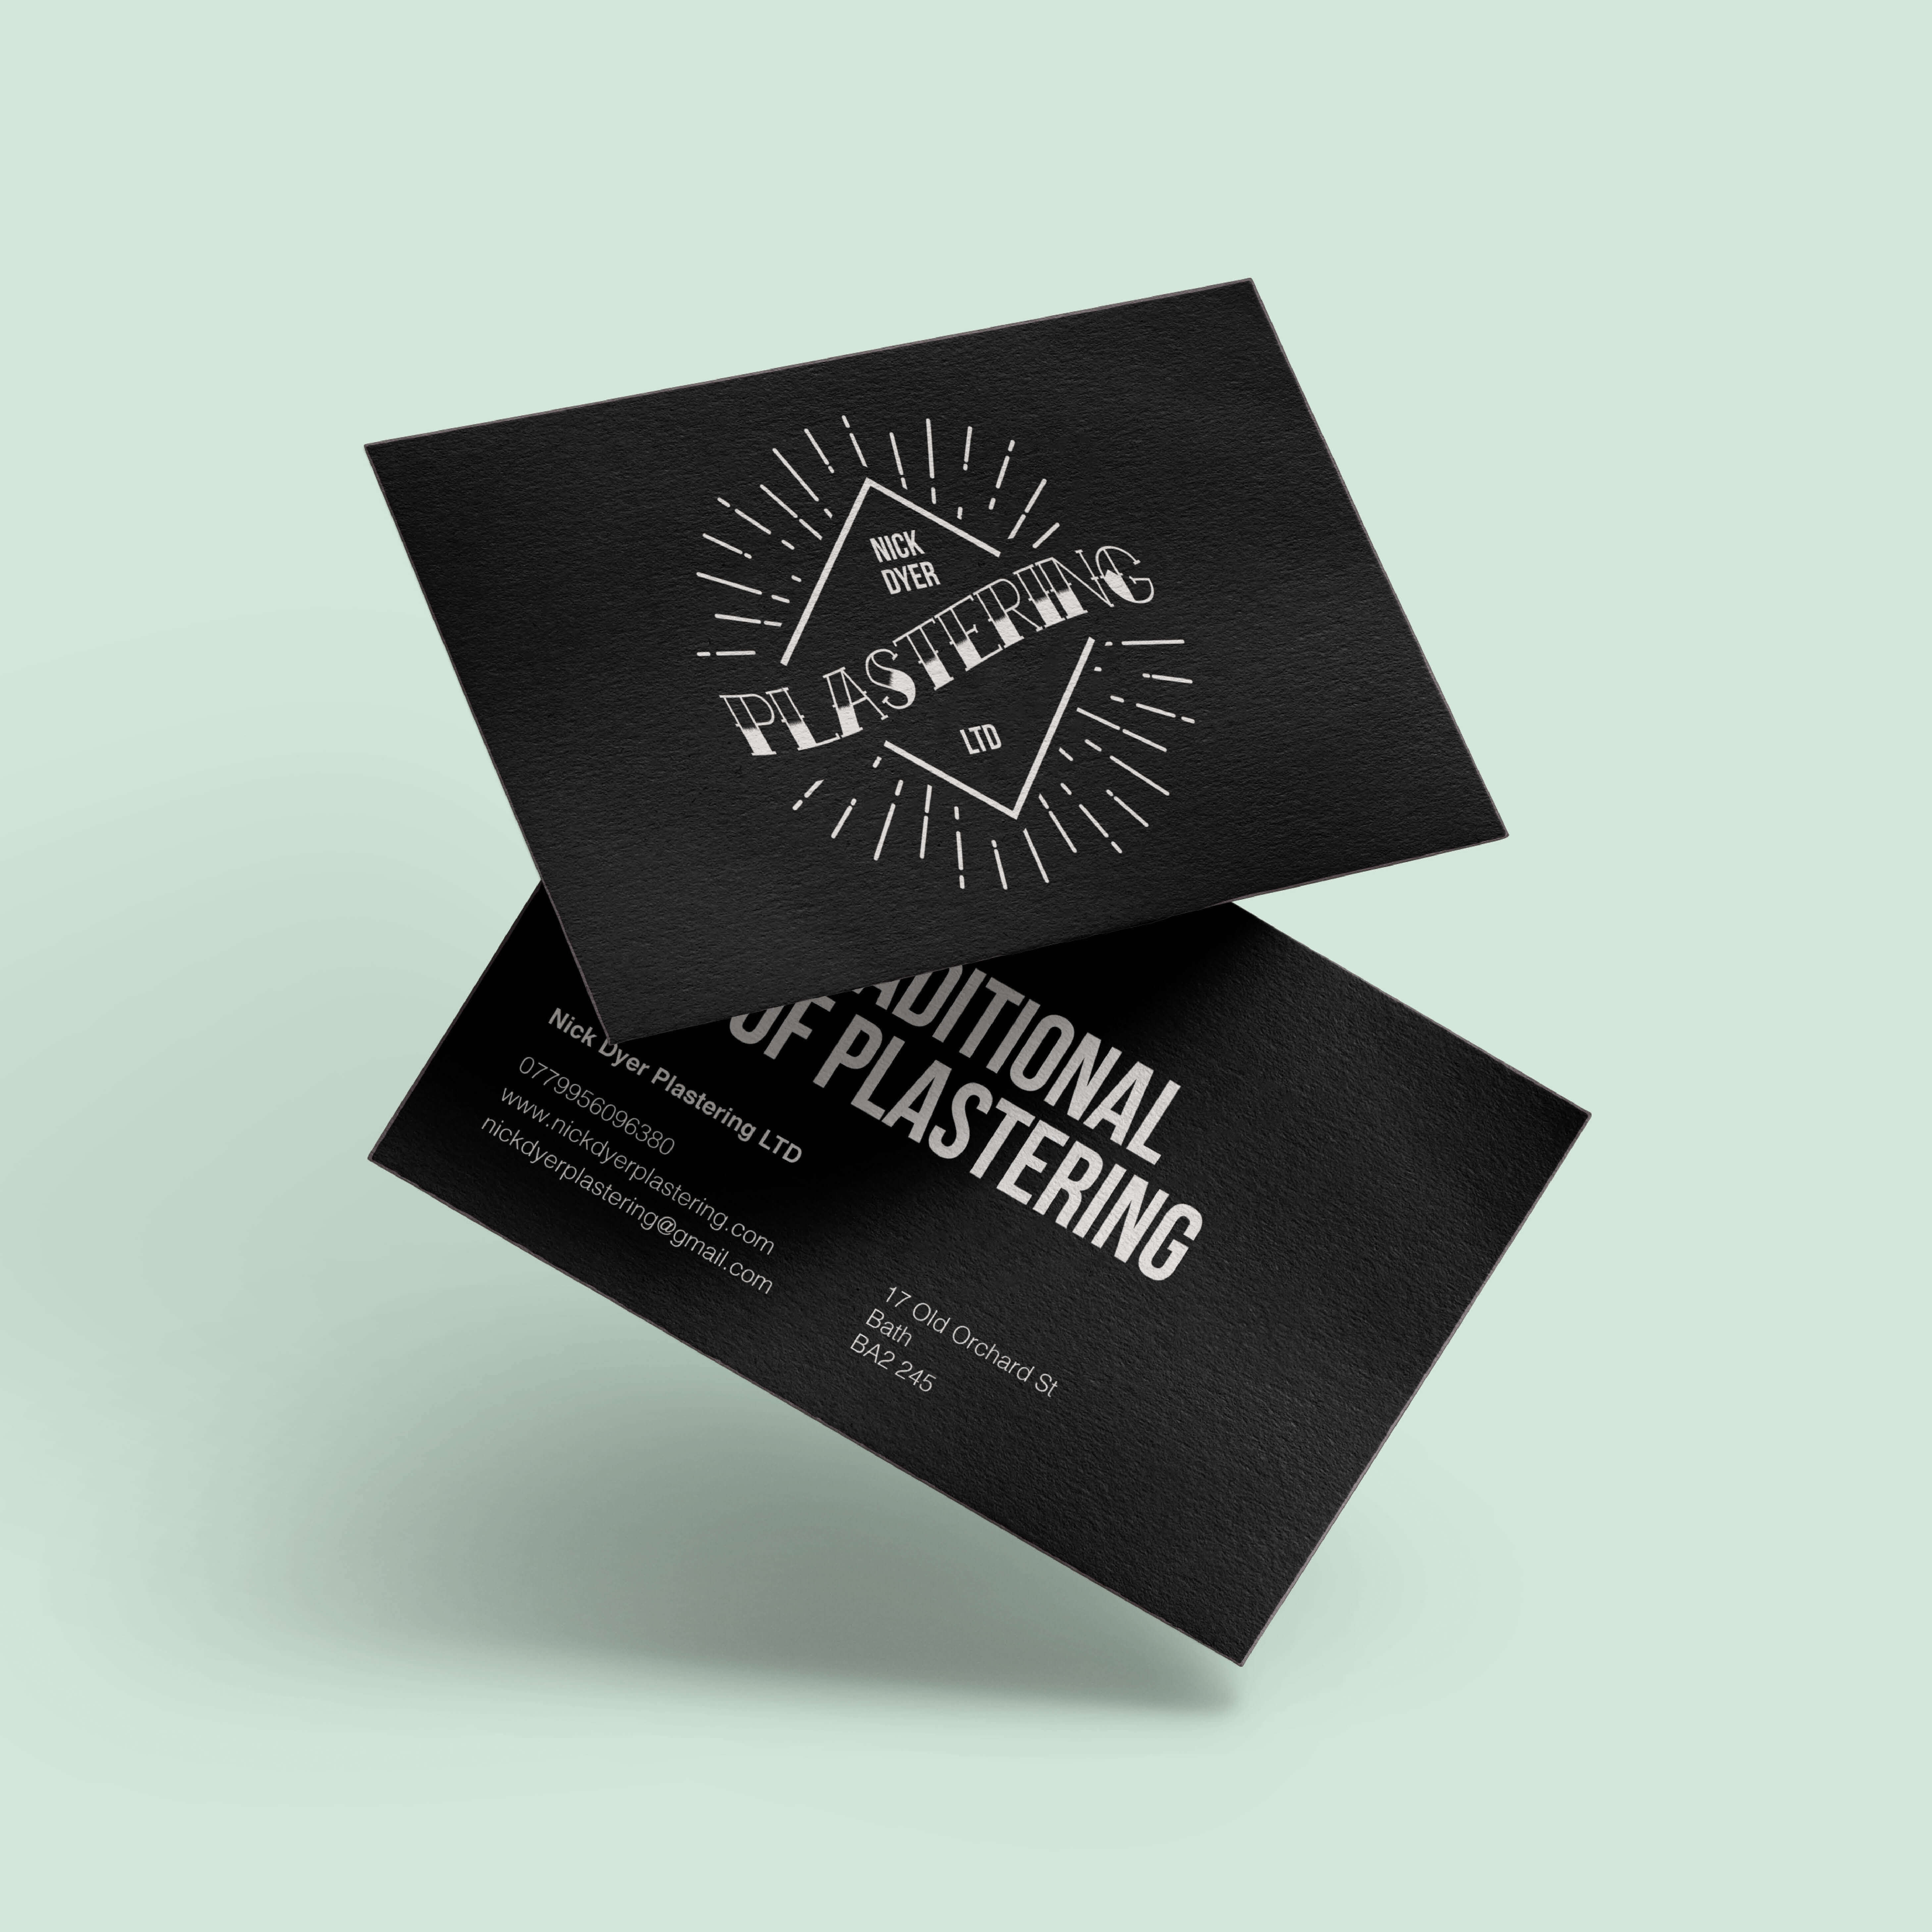 Nick Dyer Plastering | Createdjasmine With Plastering Business Cards Templates